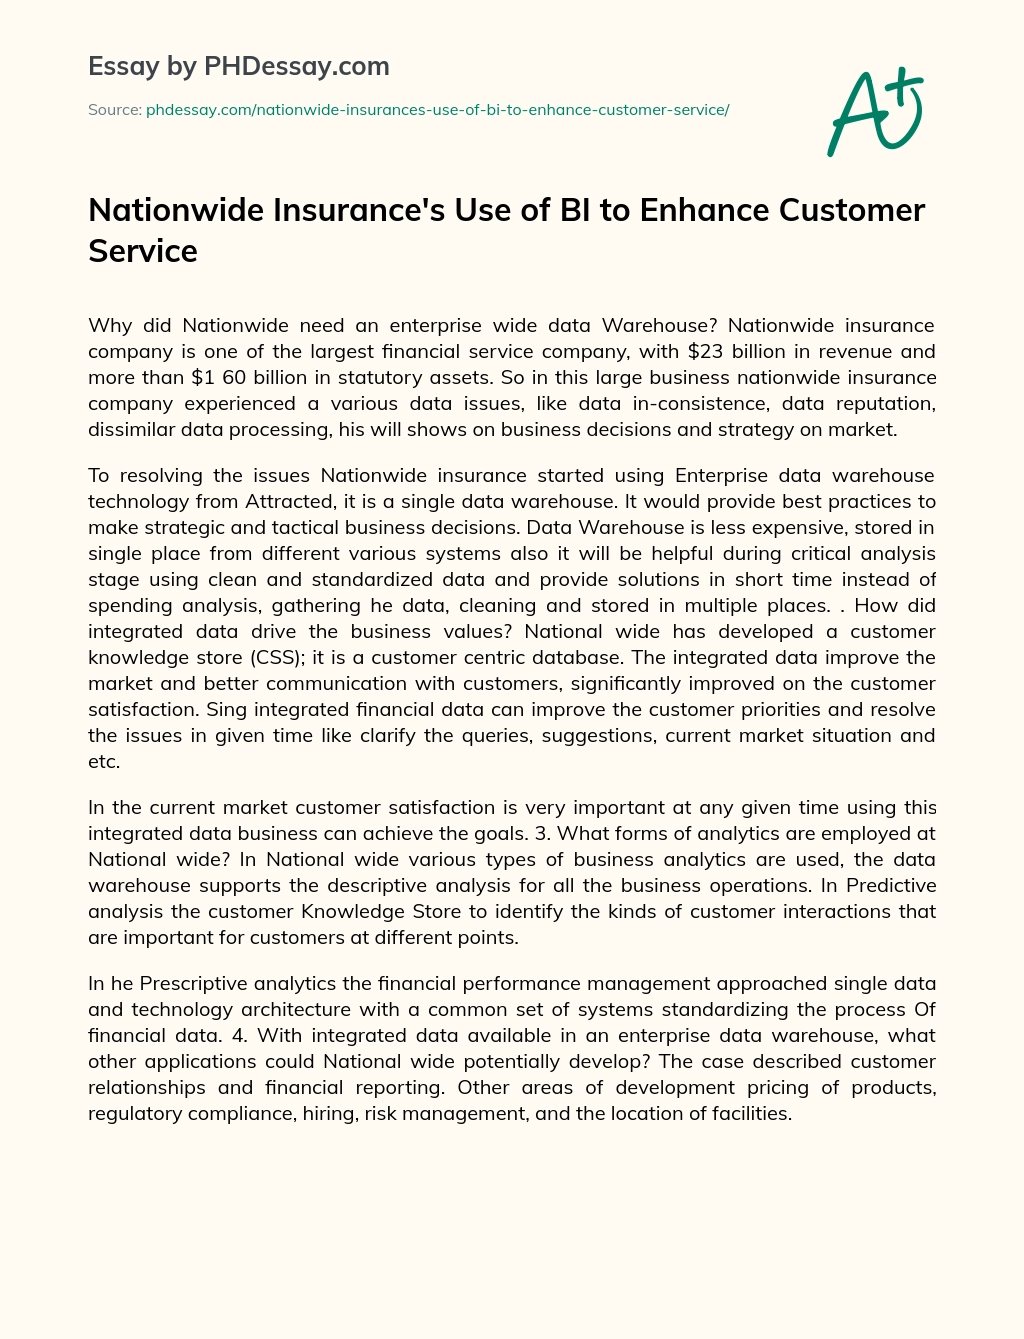 Nationwide Insurance’s Use of BI to Enhance Customer Service essay